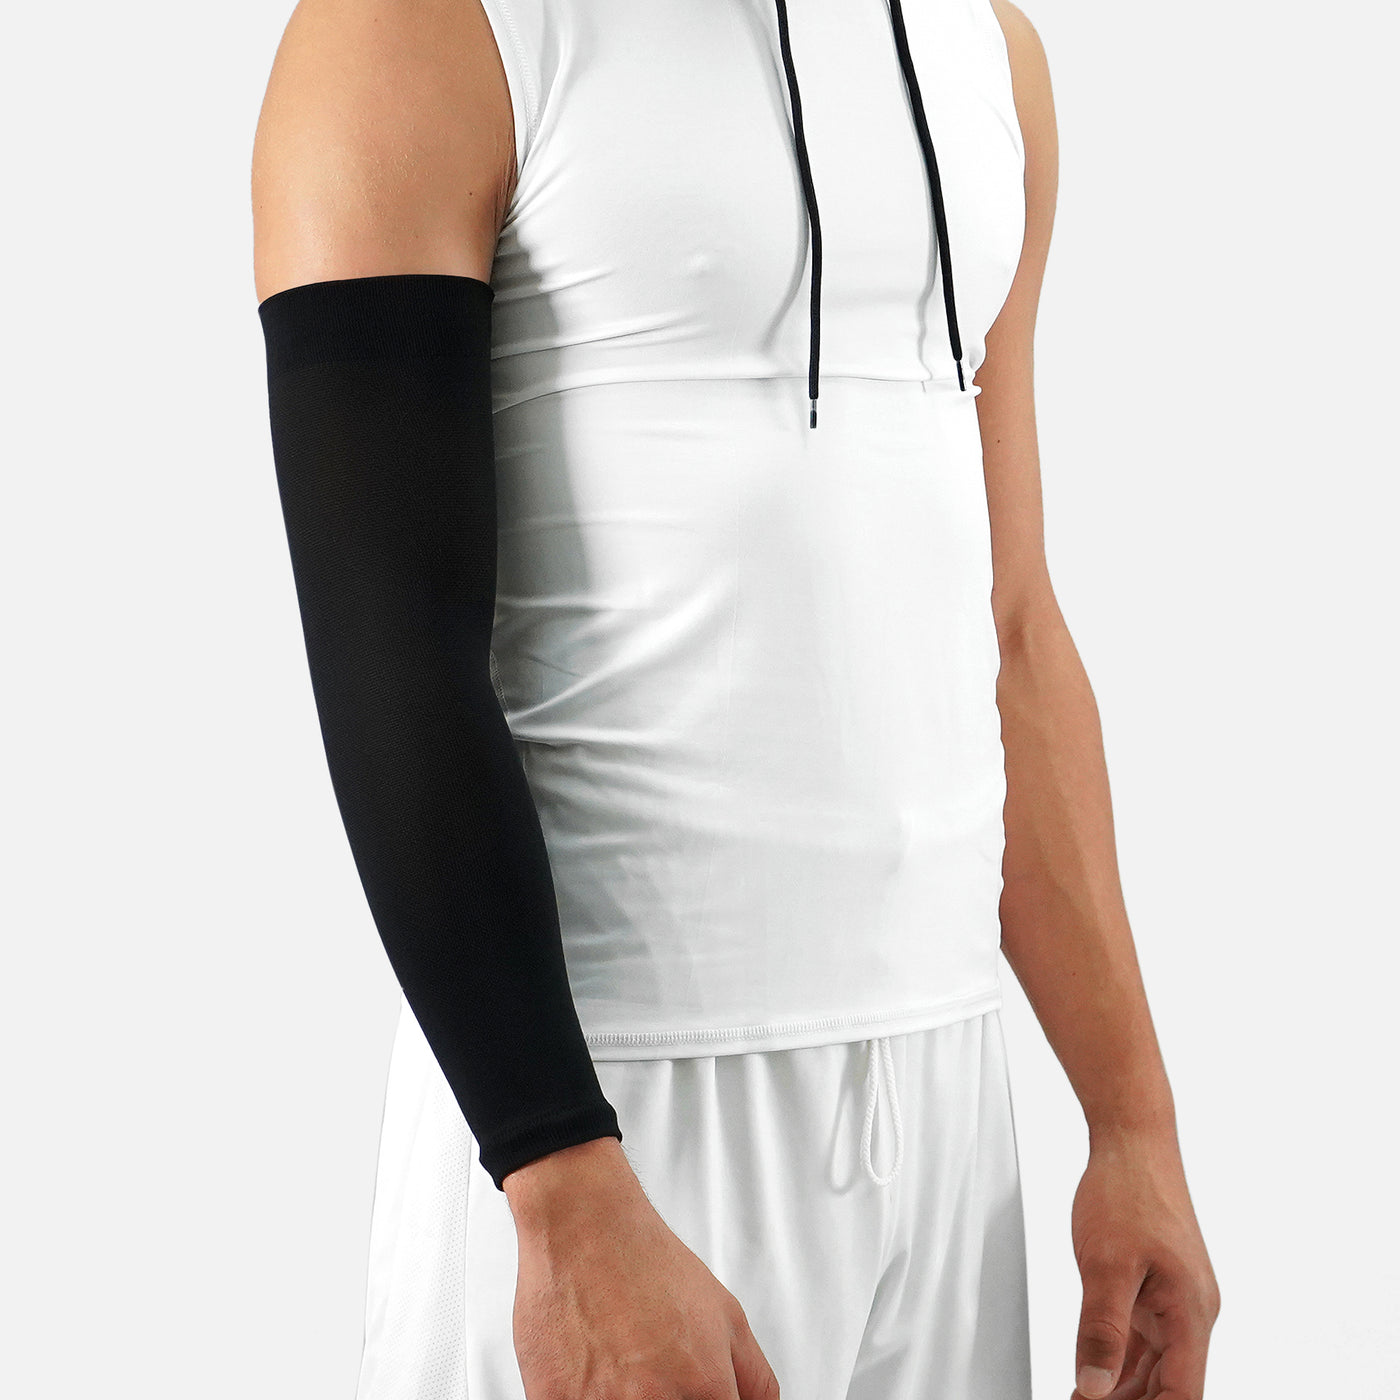 Basic Black One Size Fits All Basketball Arm Sleeve